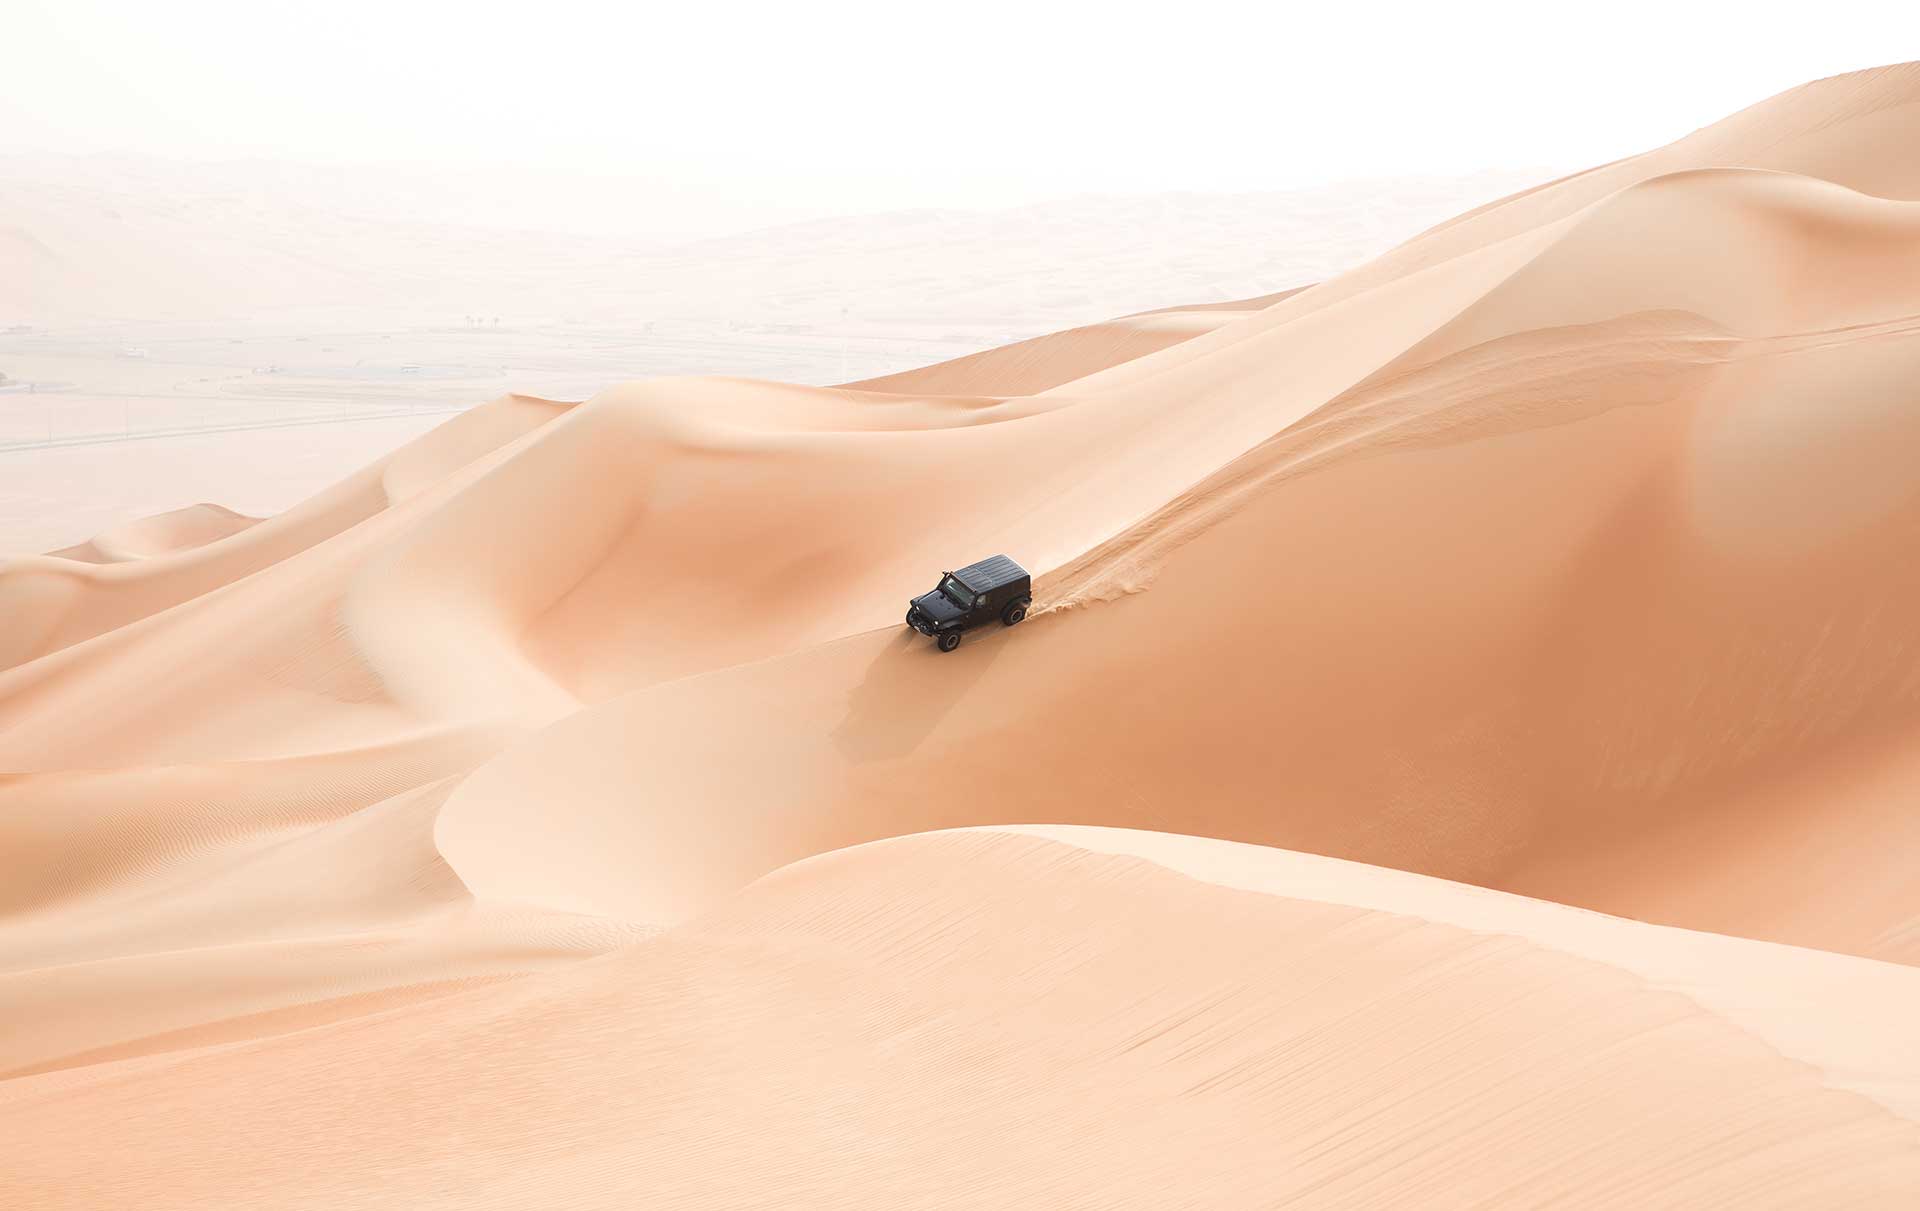 A single black car scaling giant sand dunes in the Empty Quarter desert